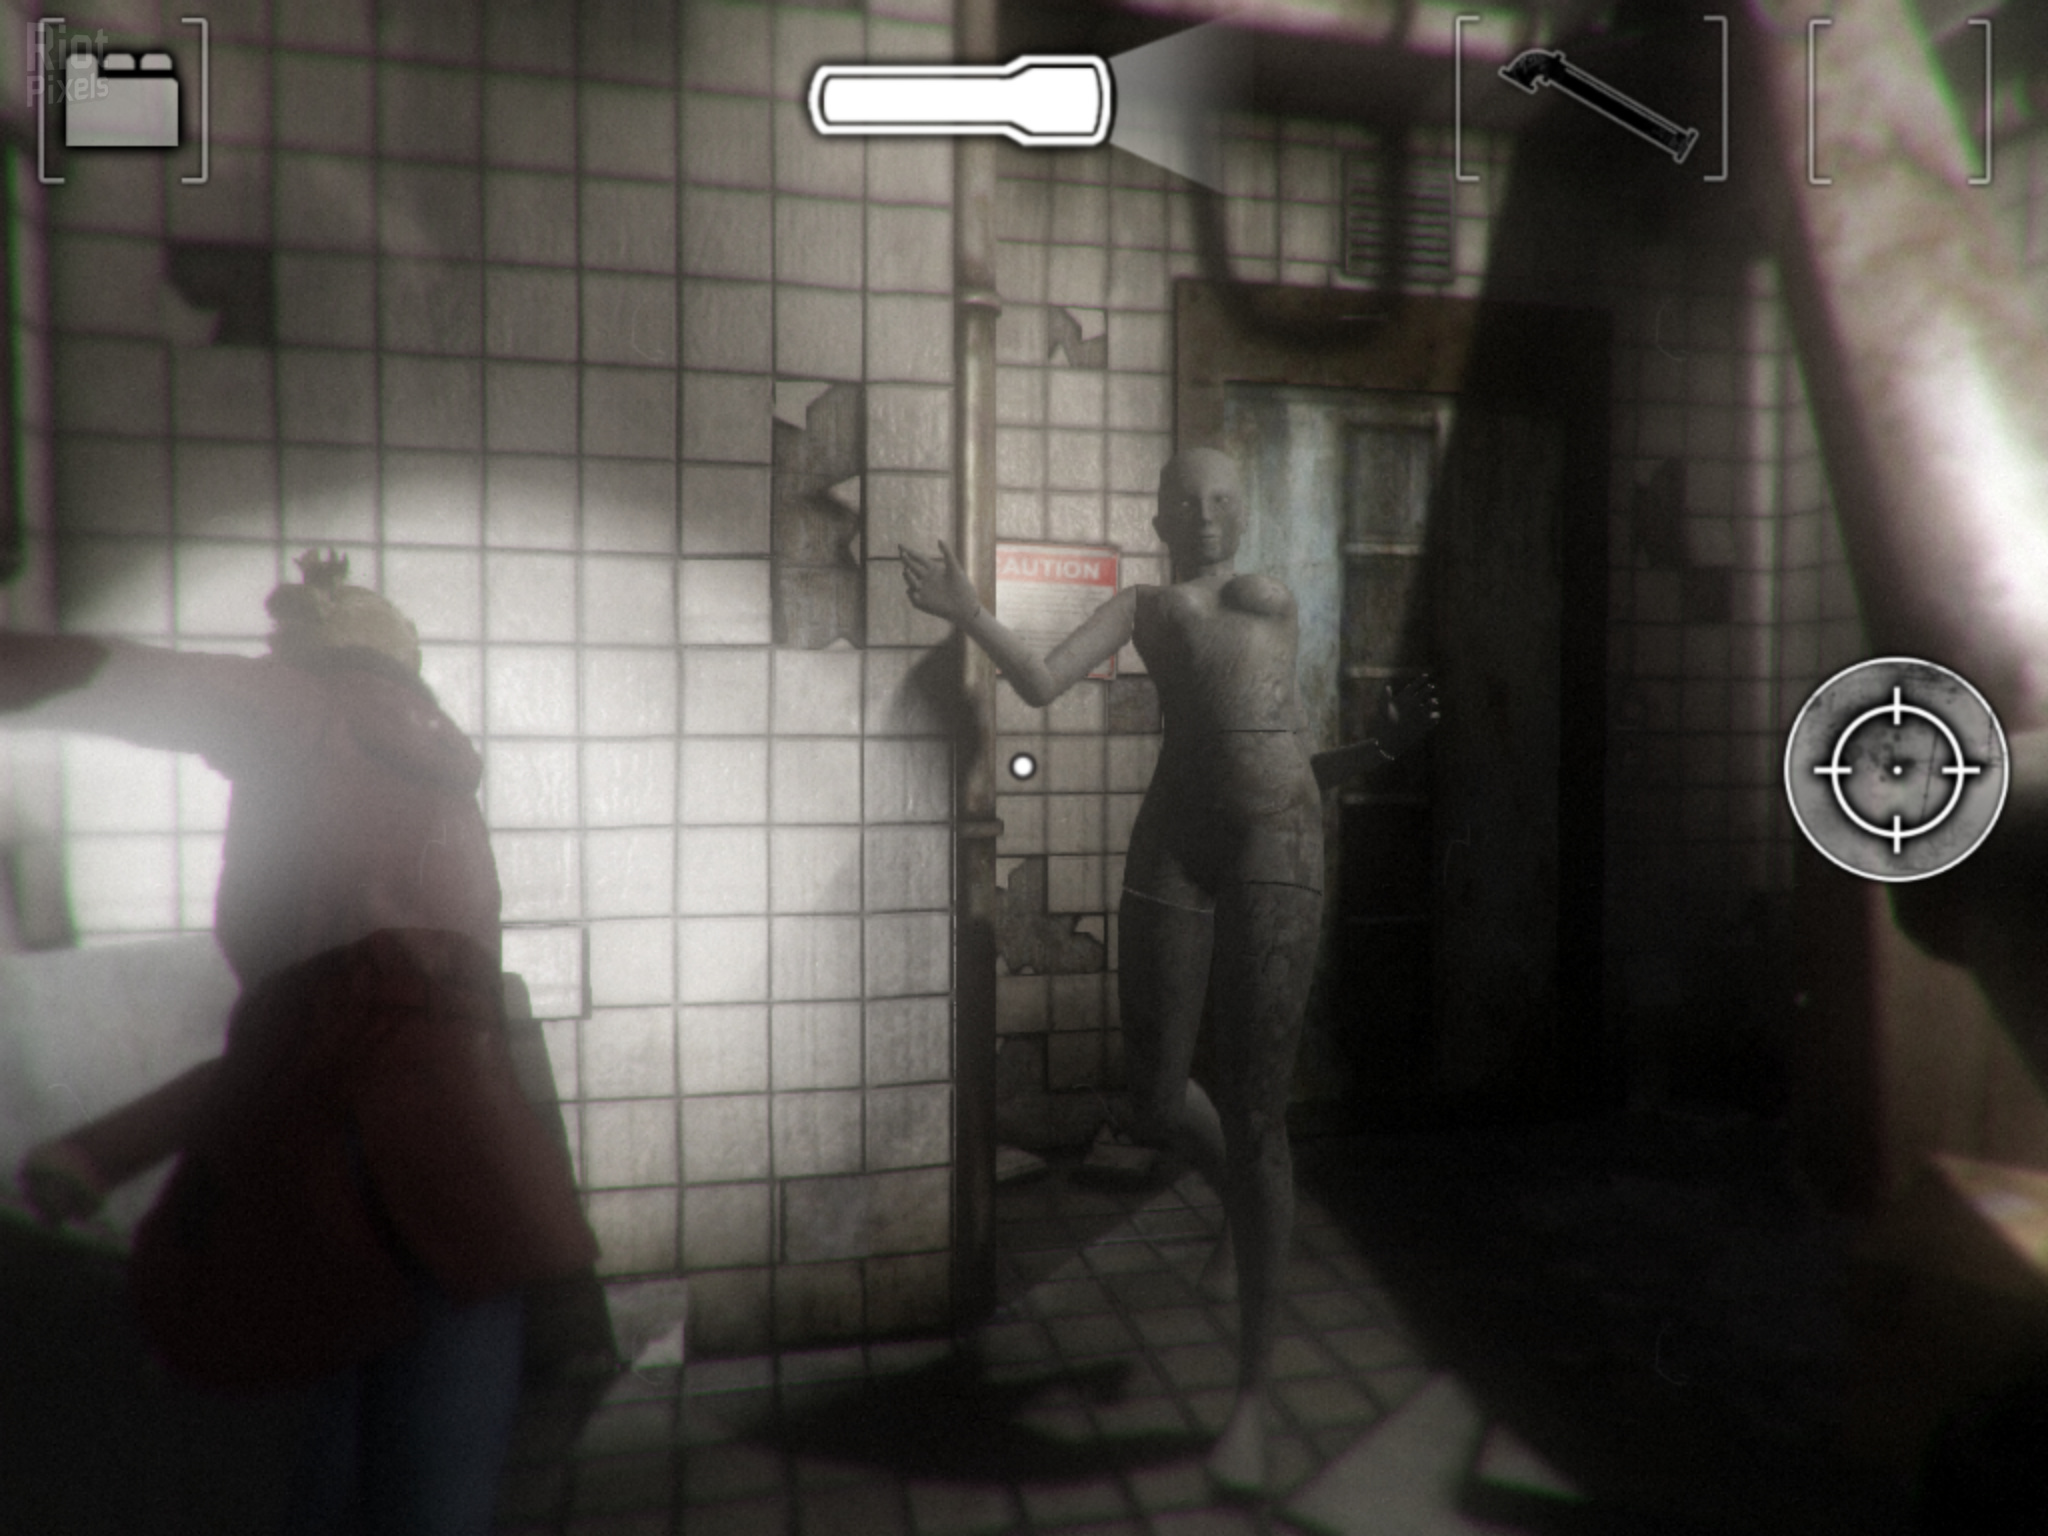 Forgotten Memories: Alternate Realities - game screenshots at Riot